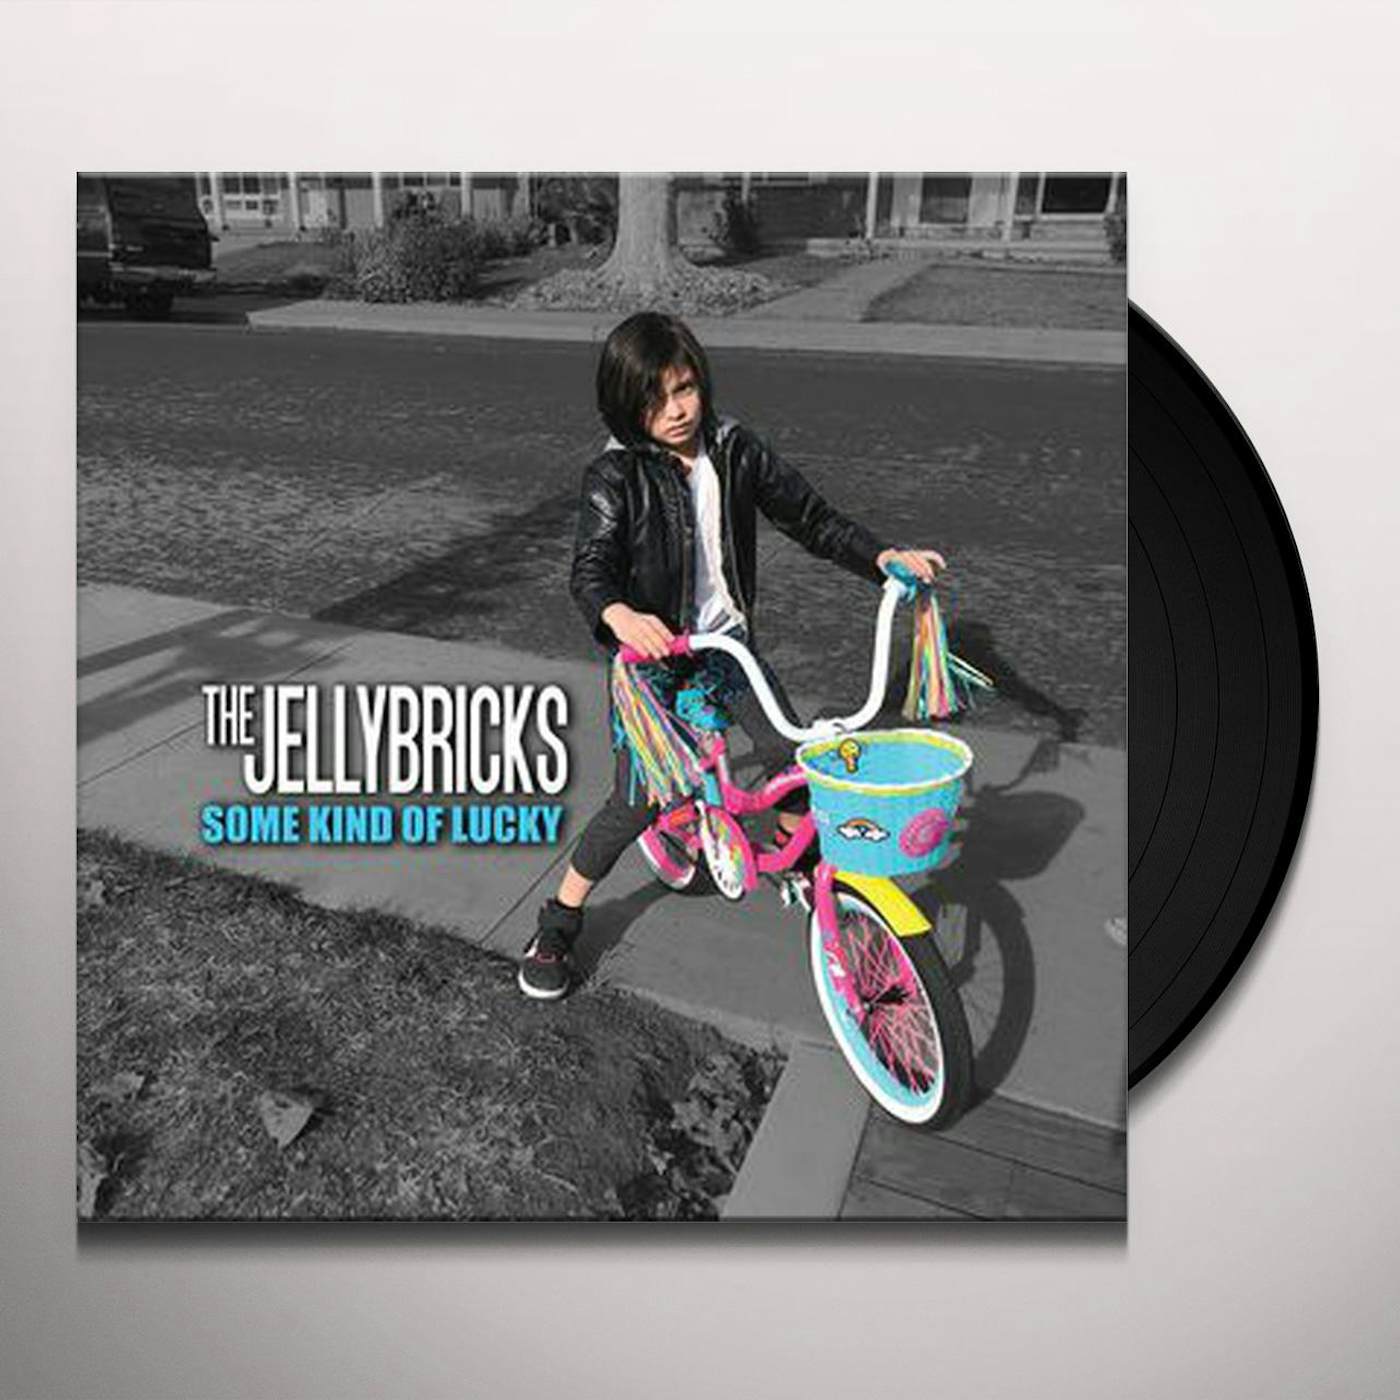 The Jellybricks Some Kind of Lucky Vinyl Record